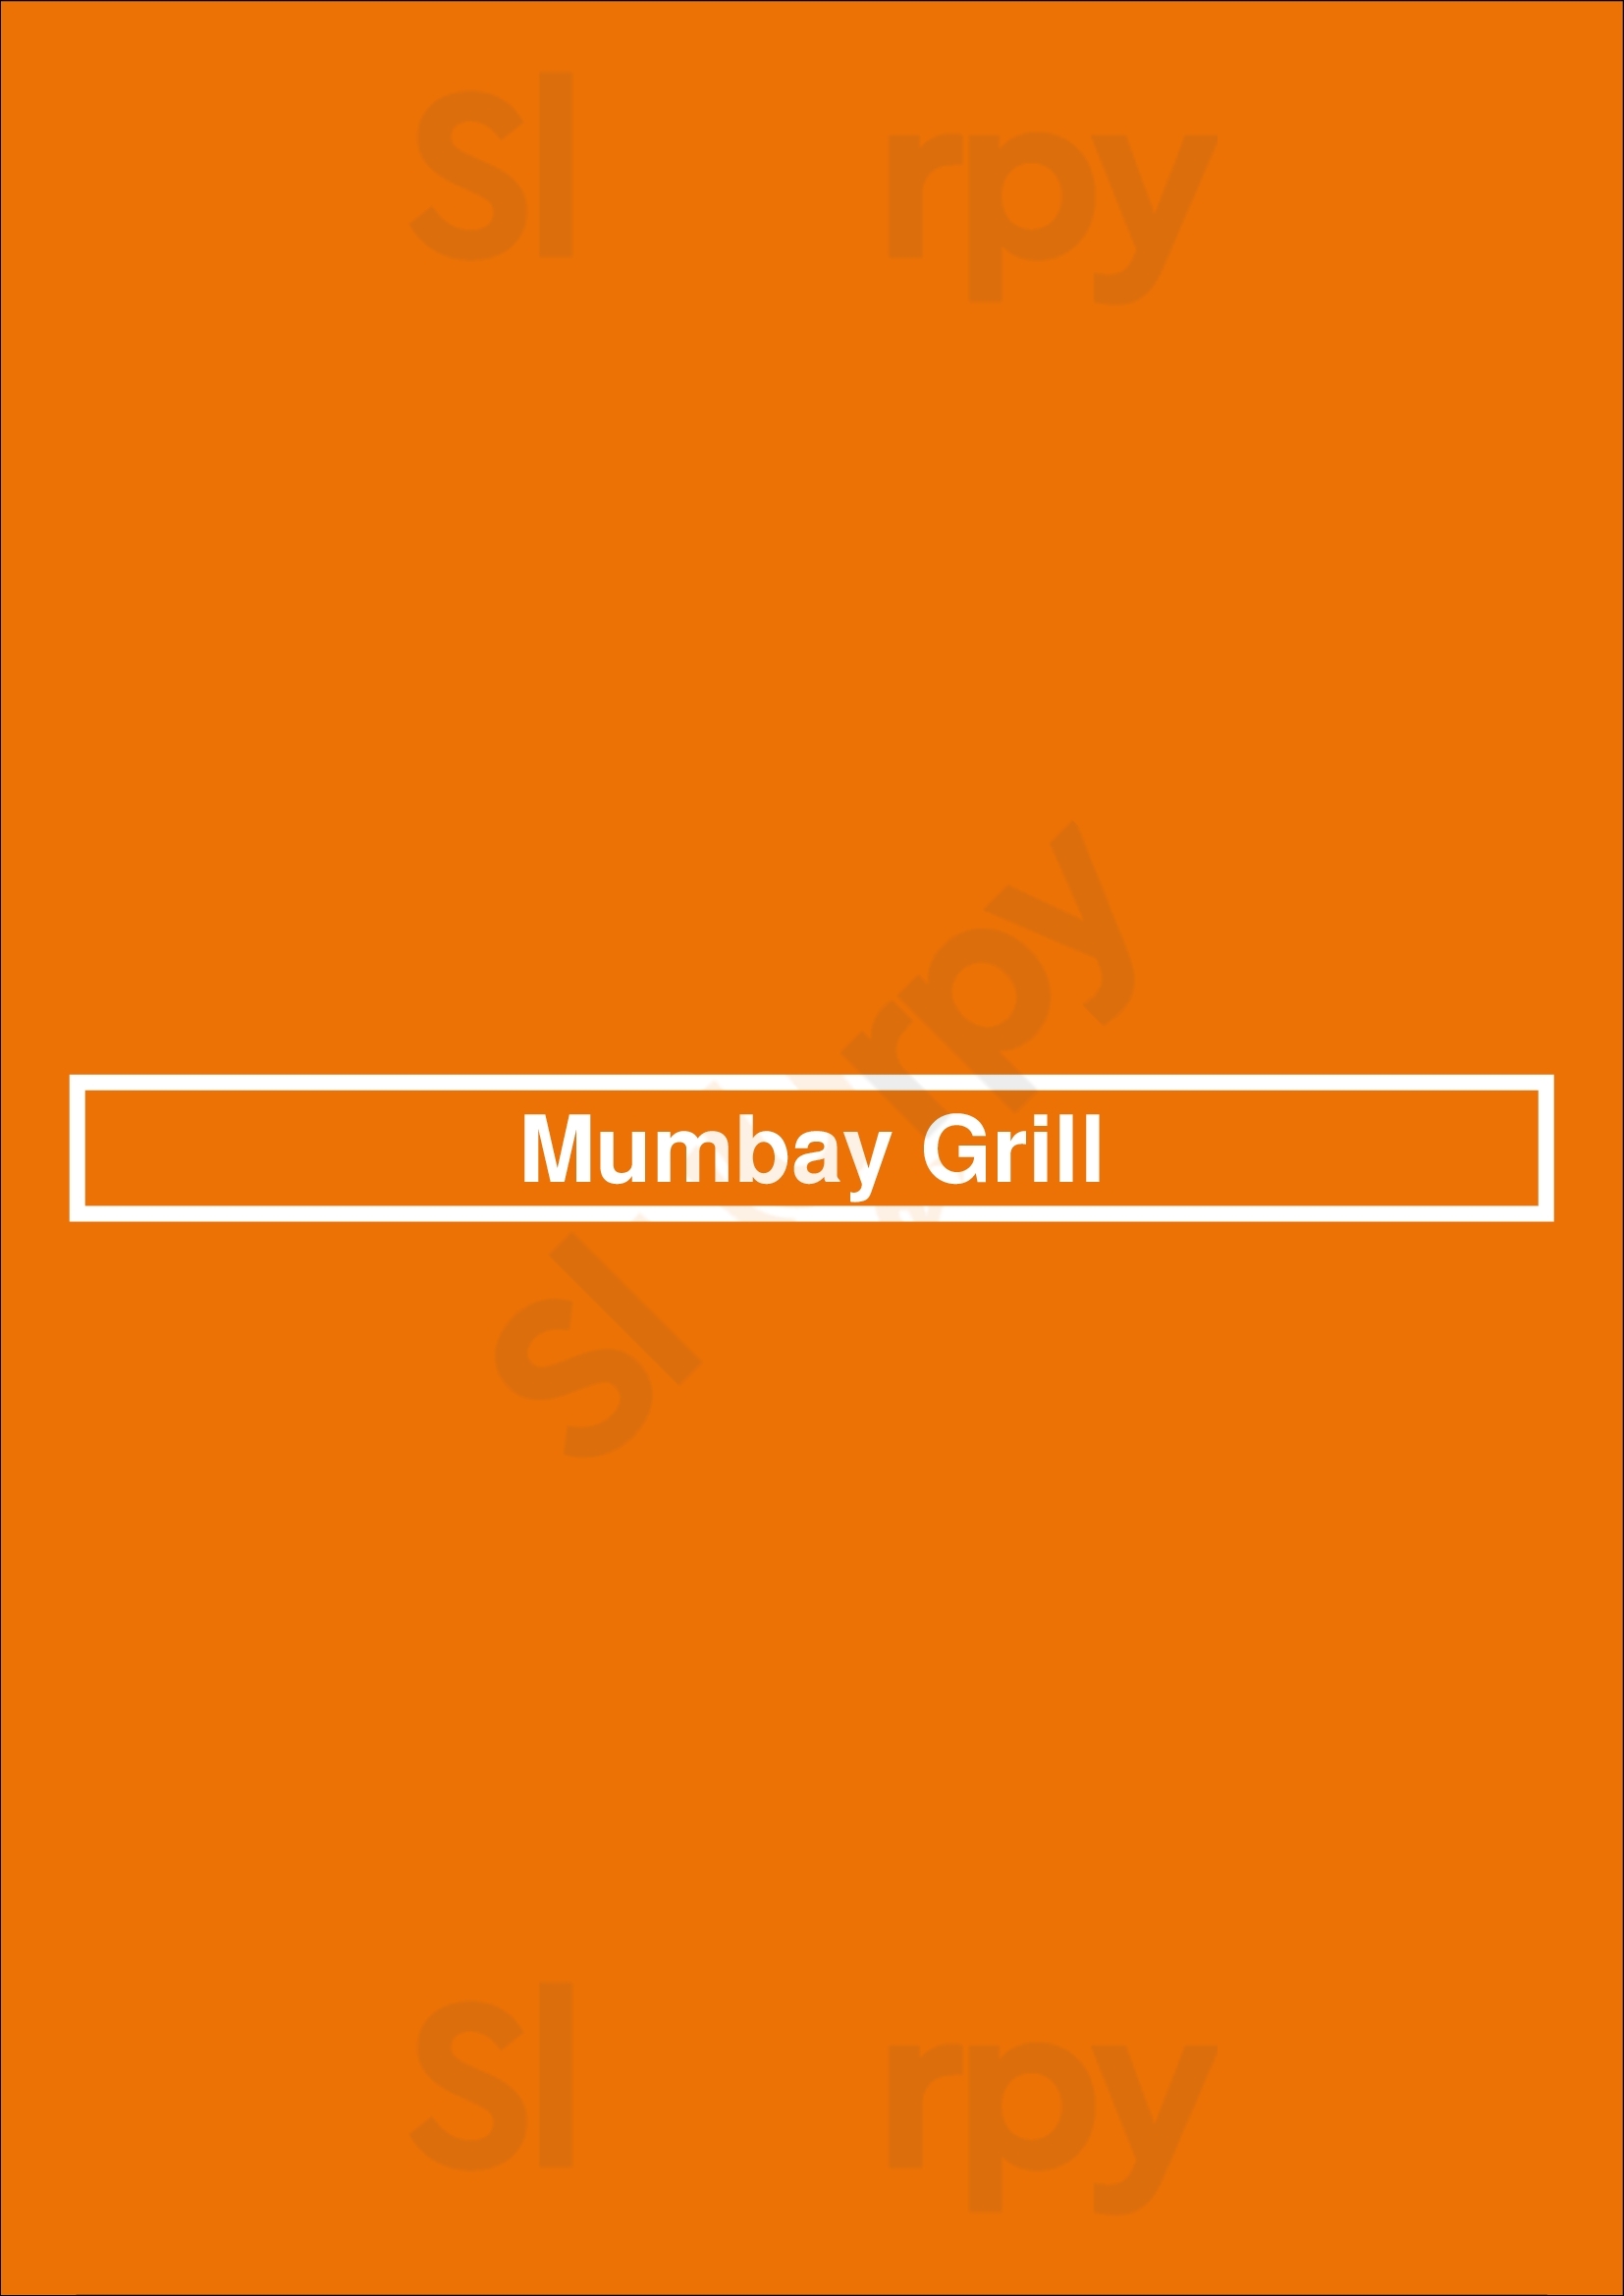 Mumbay Grill Ajax Menu - 1